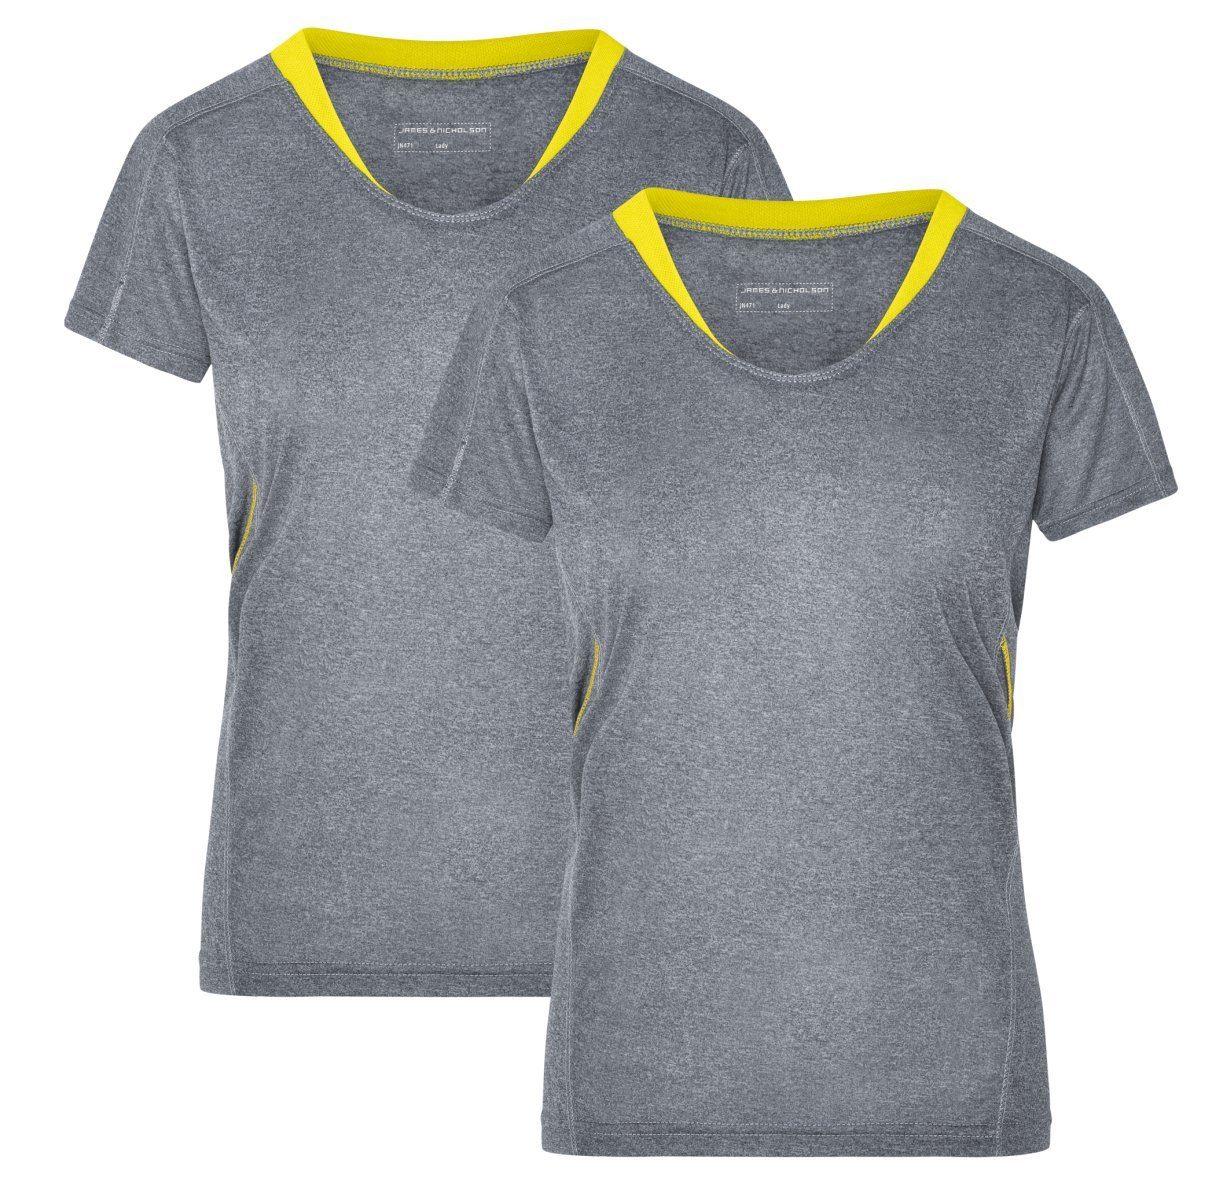 James & Nicholson Laufshirt Doppelpack T-Shirt Running 2 JN471 grey-melange/lemon und Atmungsaktiv Kurzarm Damen Laufshirt Feuchtigkeitsregulierend Stück) (Doppelpack